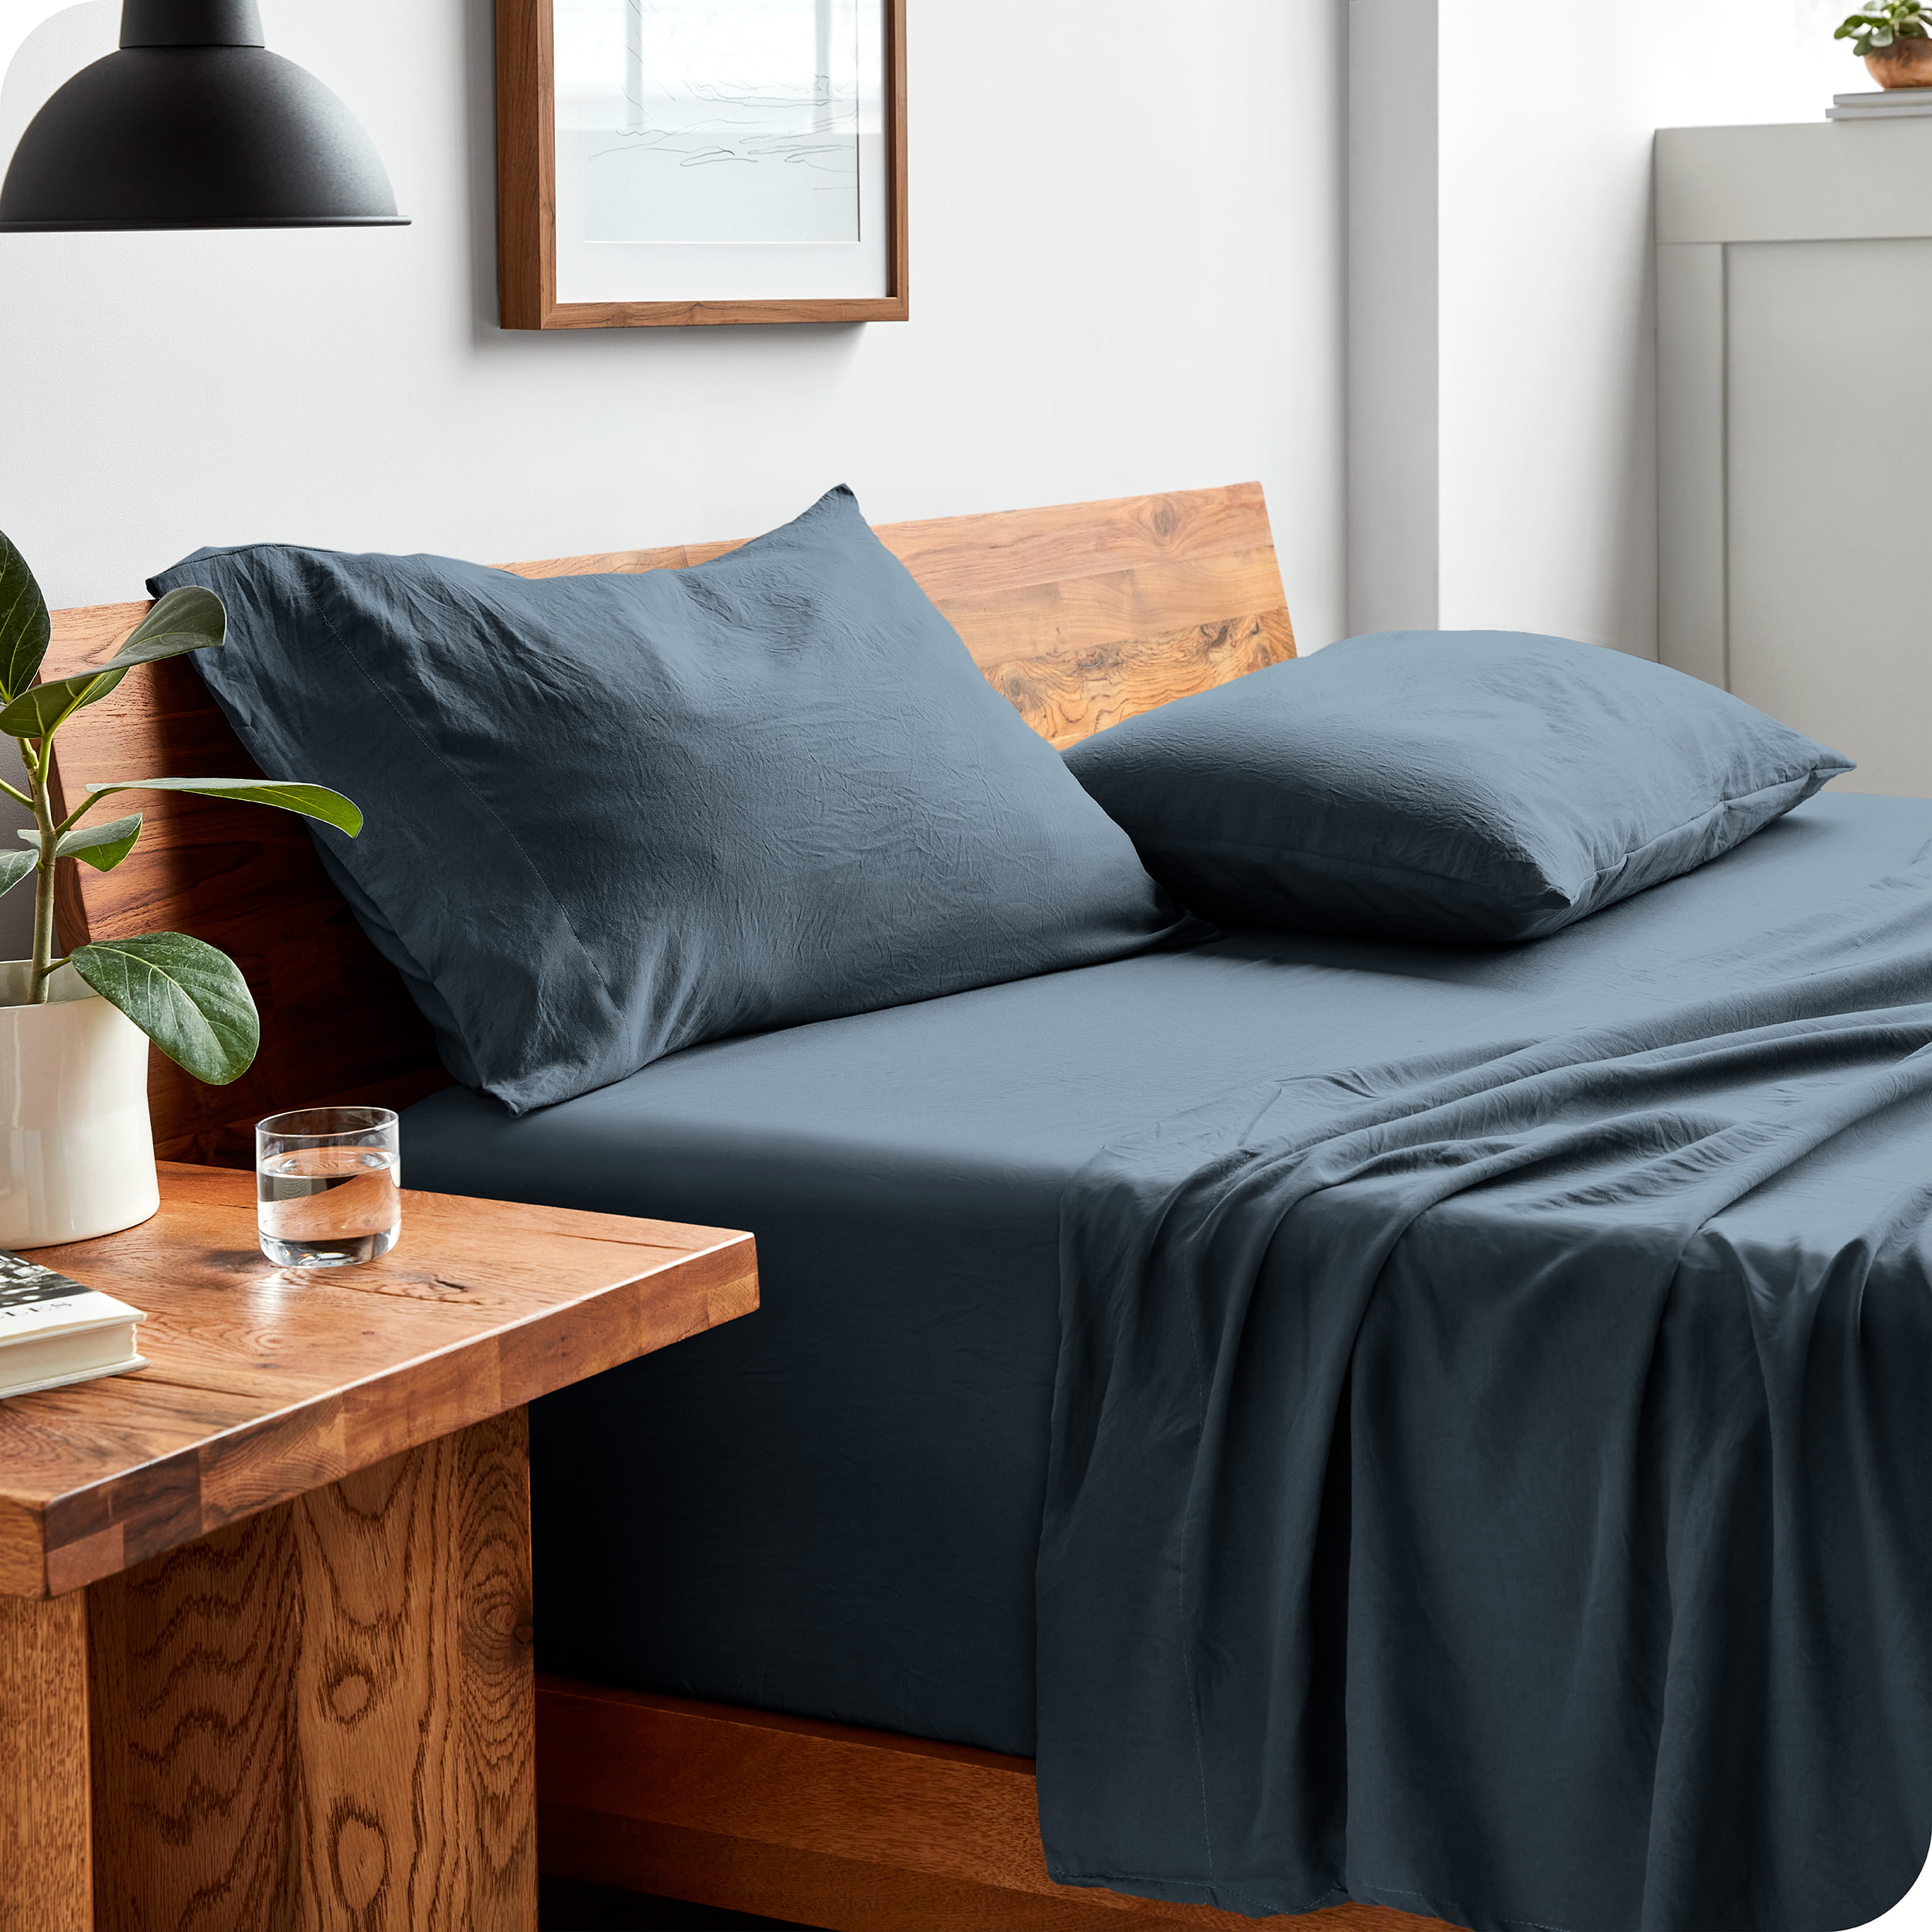 Premium Bamboo Bed Sheets Ultra Soft & Cool Bedding Sheet Set 